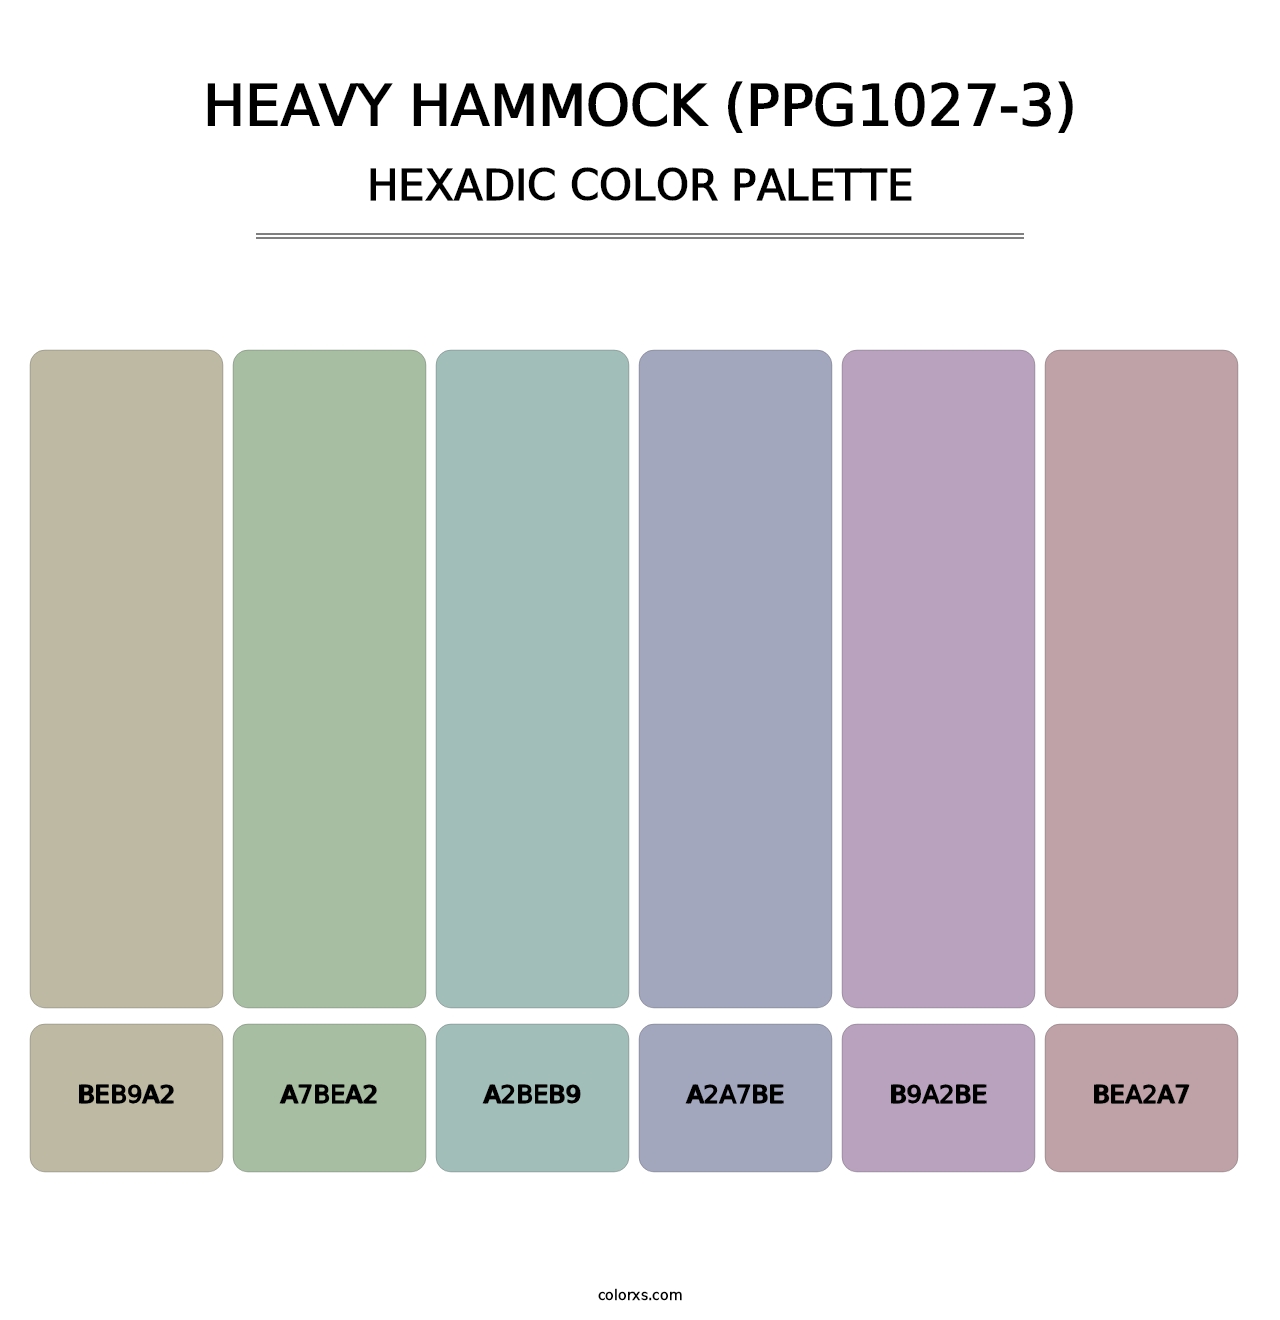 Heavy Hammock (PPG1027-3) - Hexadic Color Palette